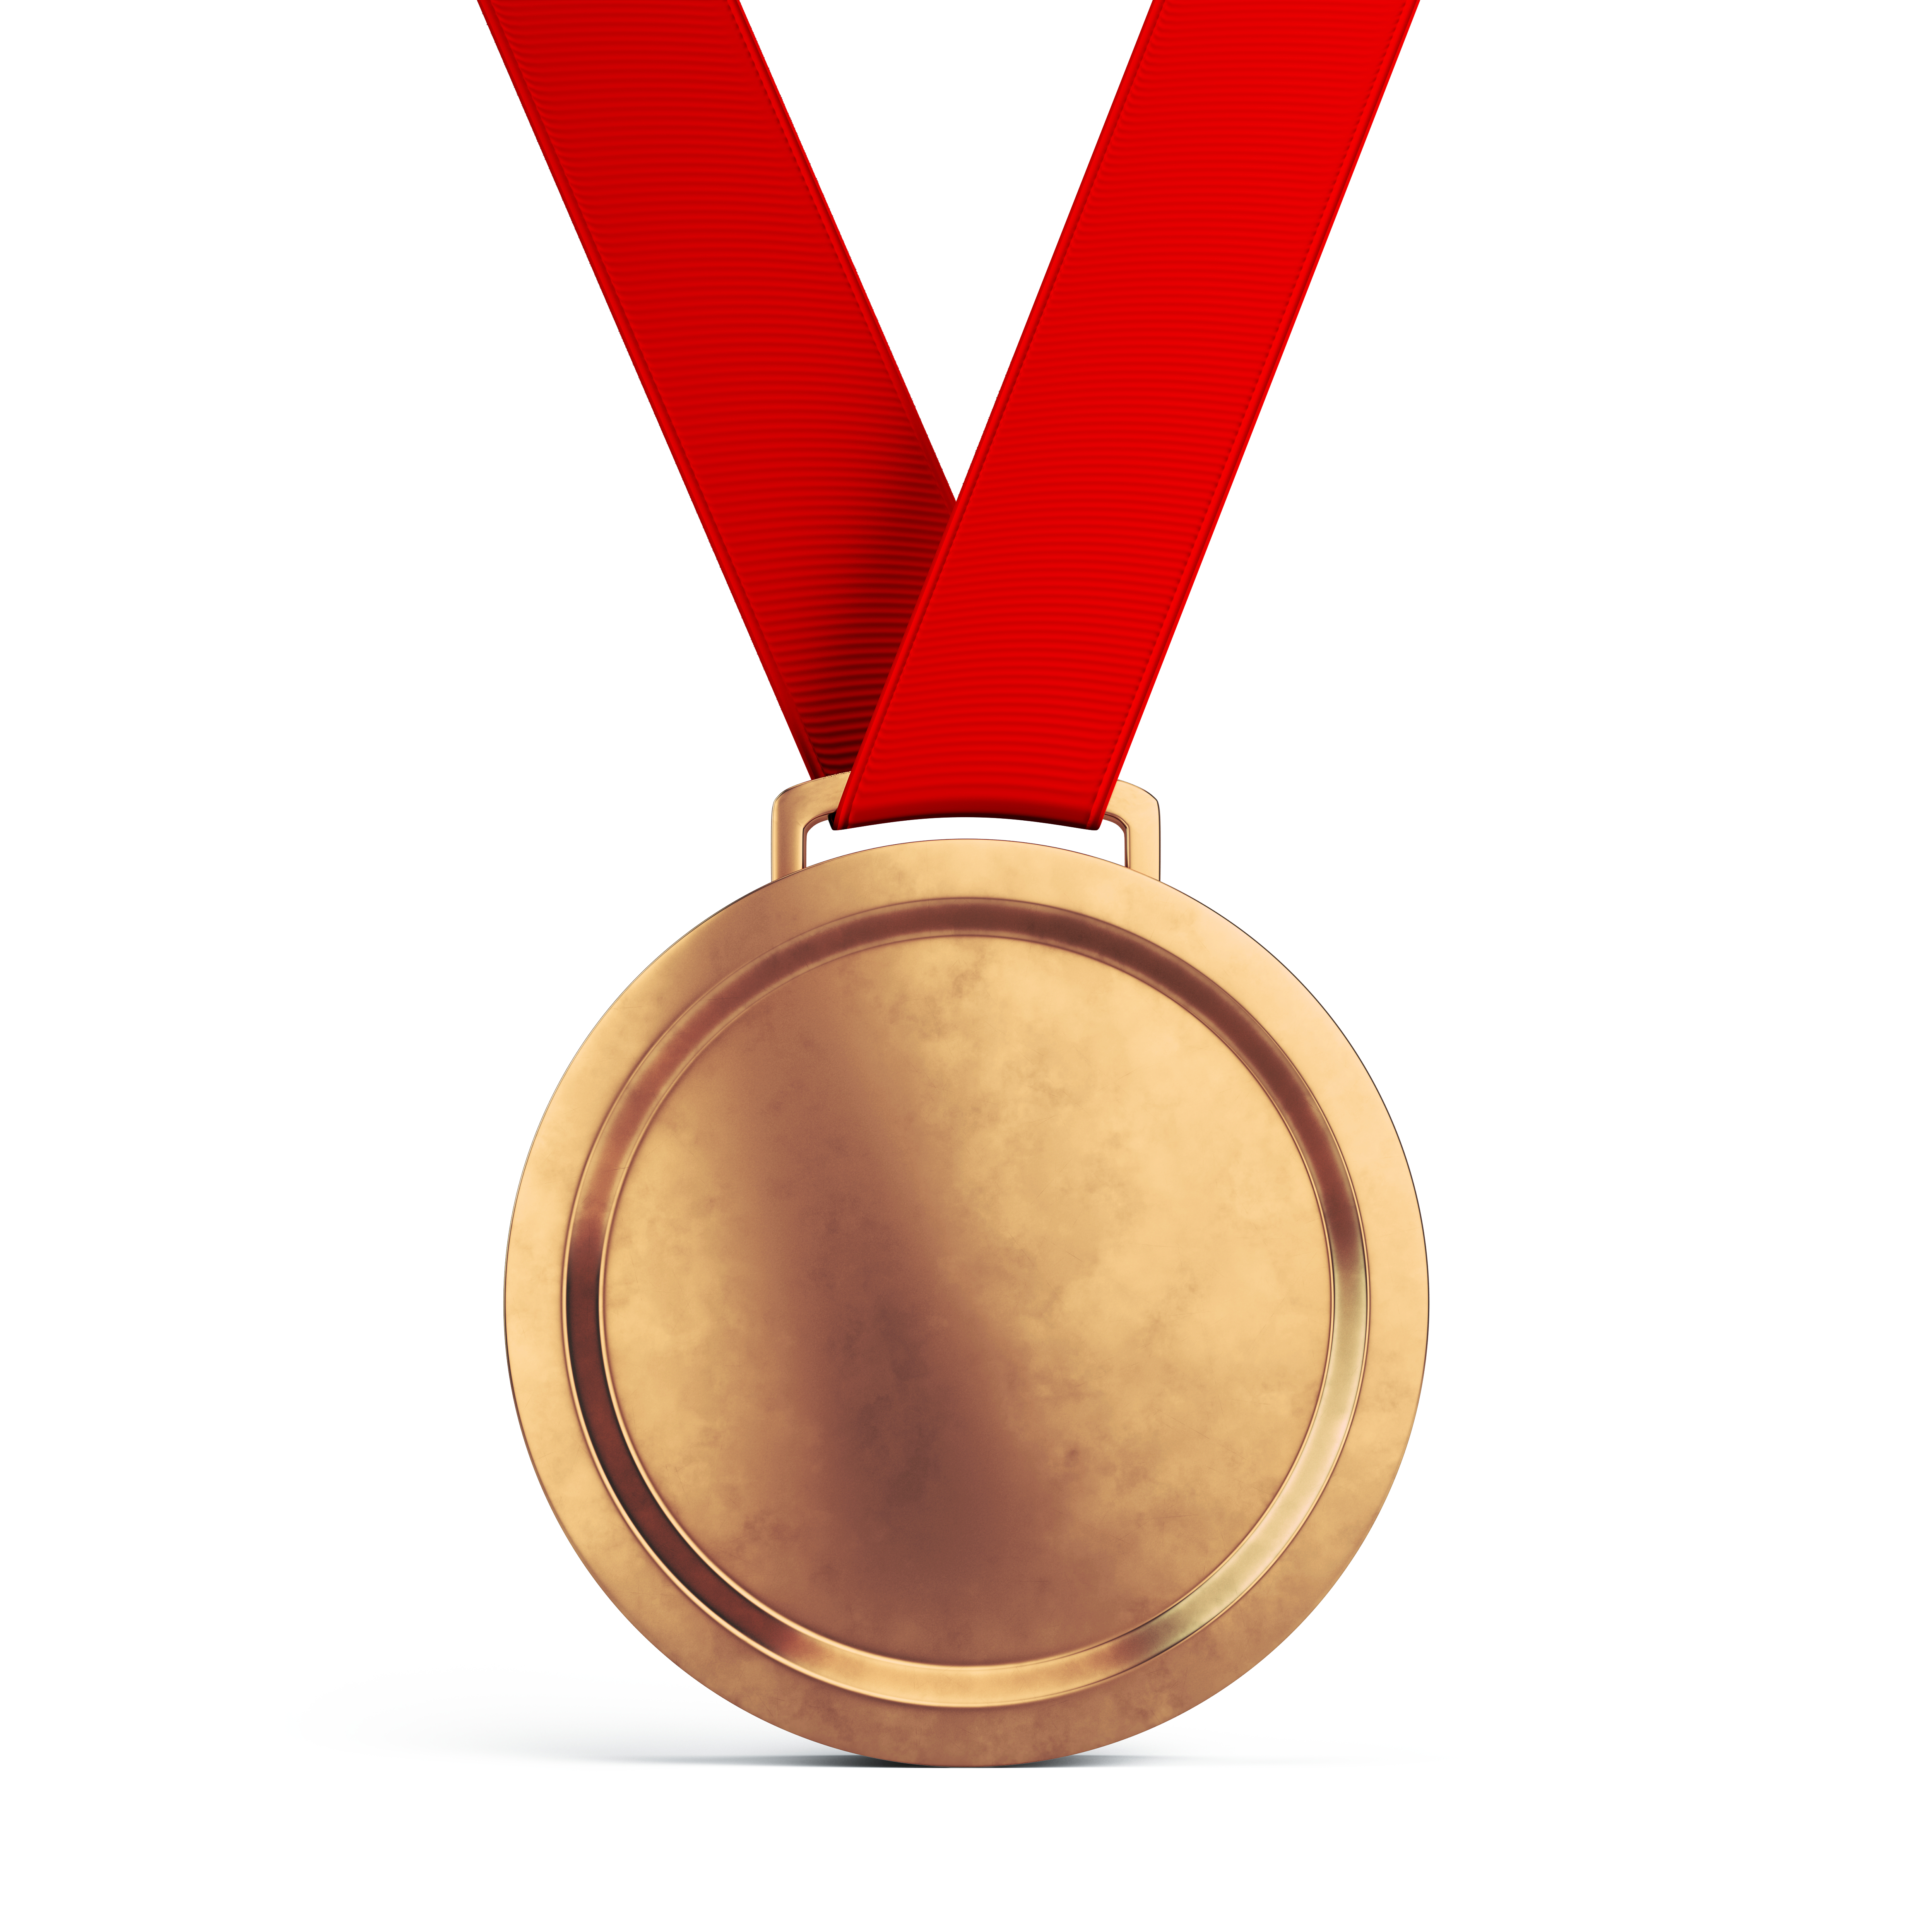 bronzen medaille